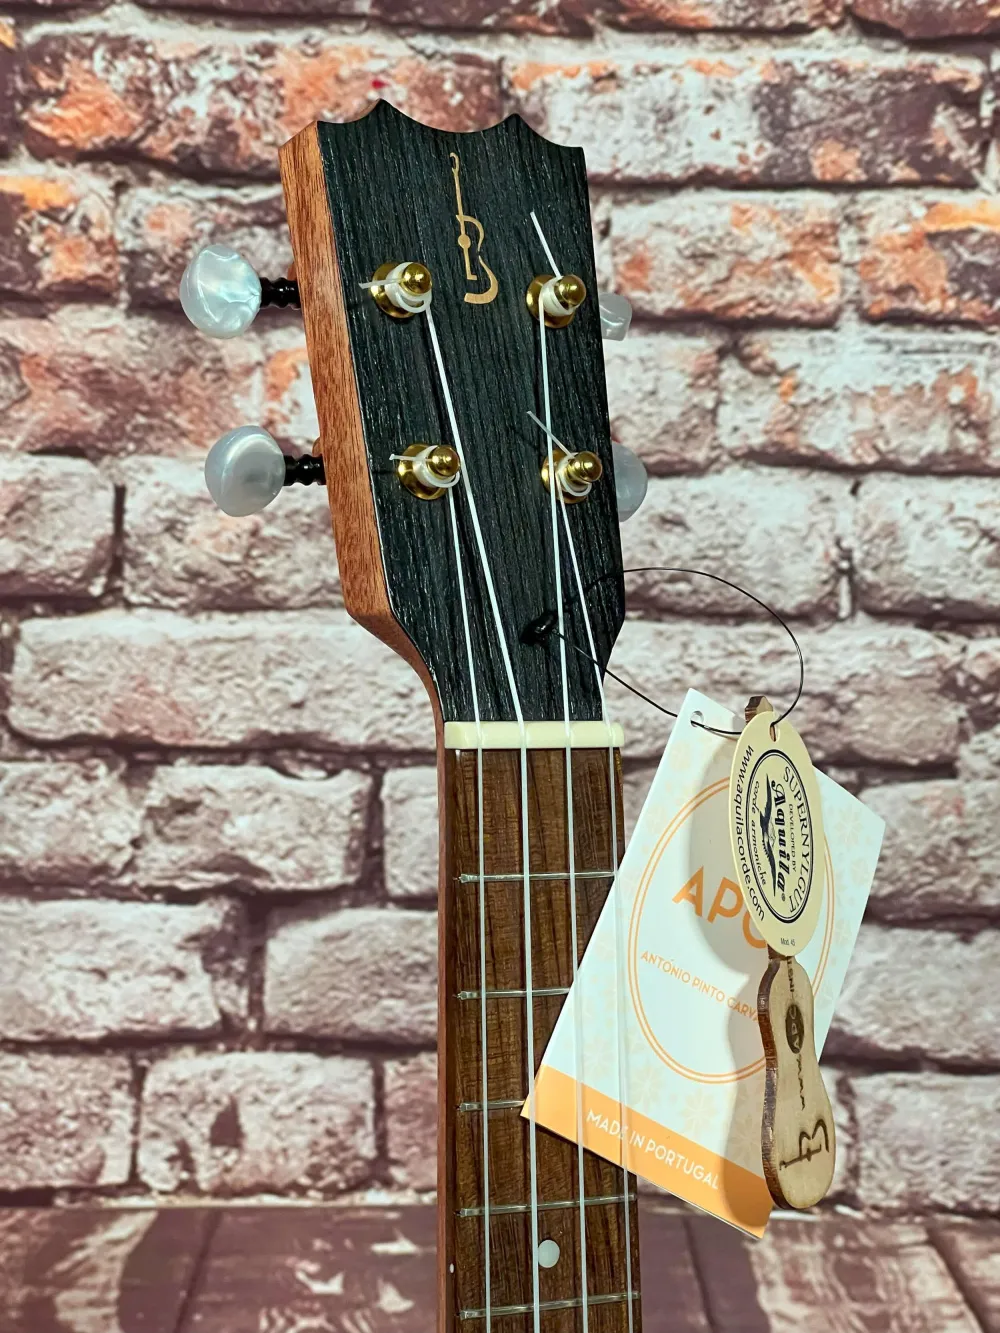 Kopf-oben-Detailansicht einer APC CT Concert Ukulele Modell Traditional, Handarbeit aus Portugal